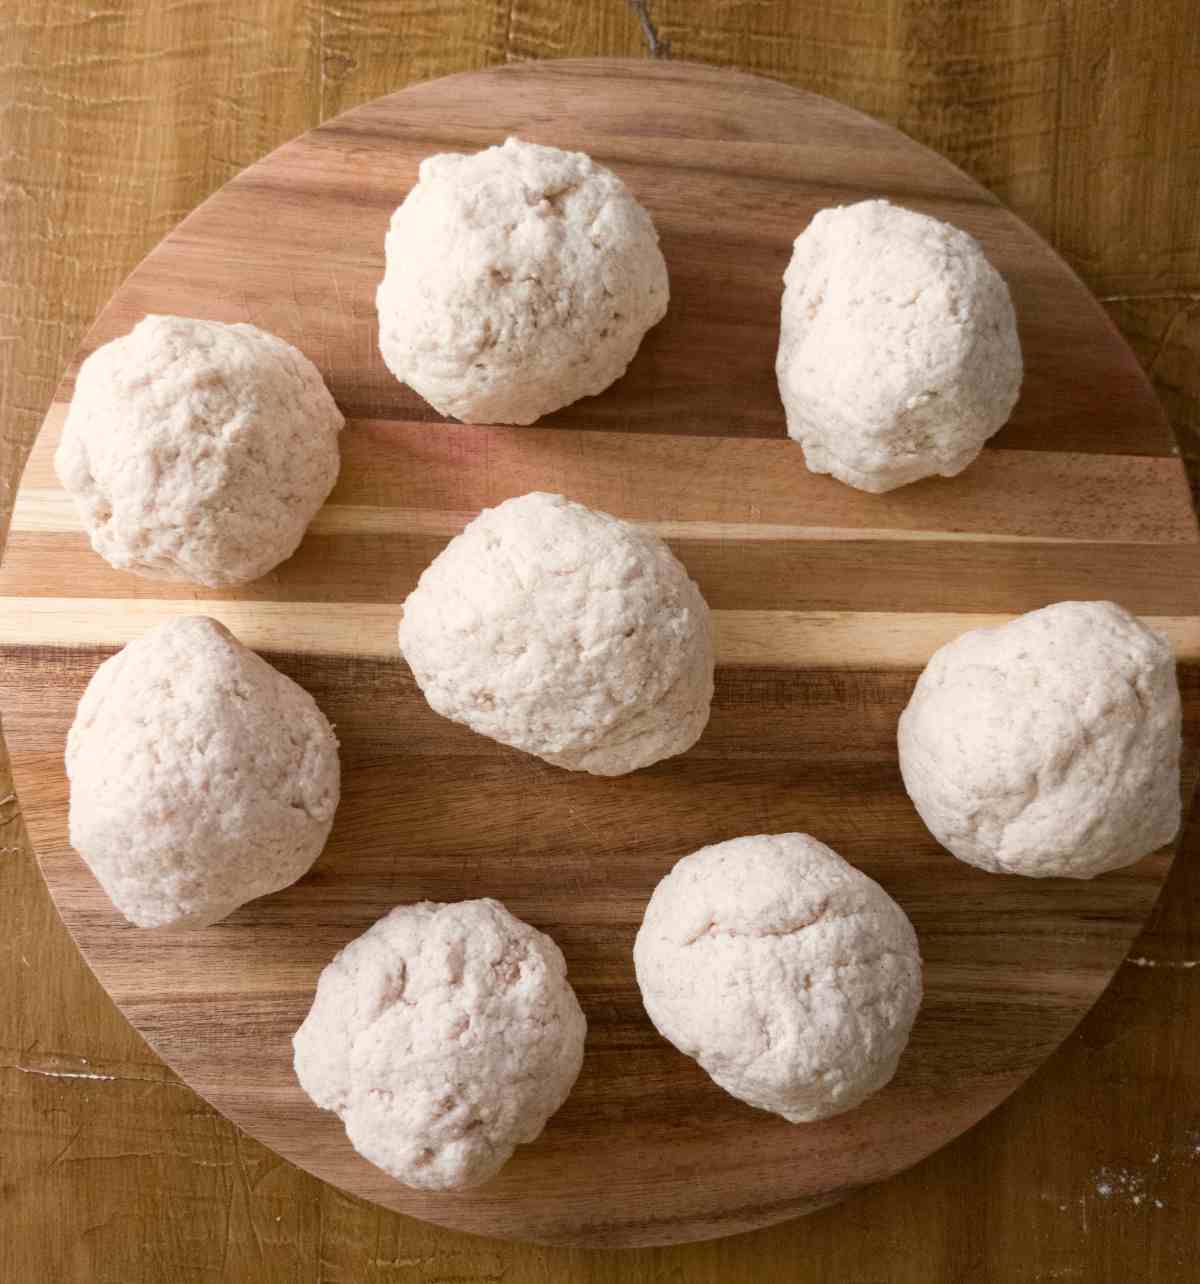 The dough pieces shaped into balls.